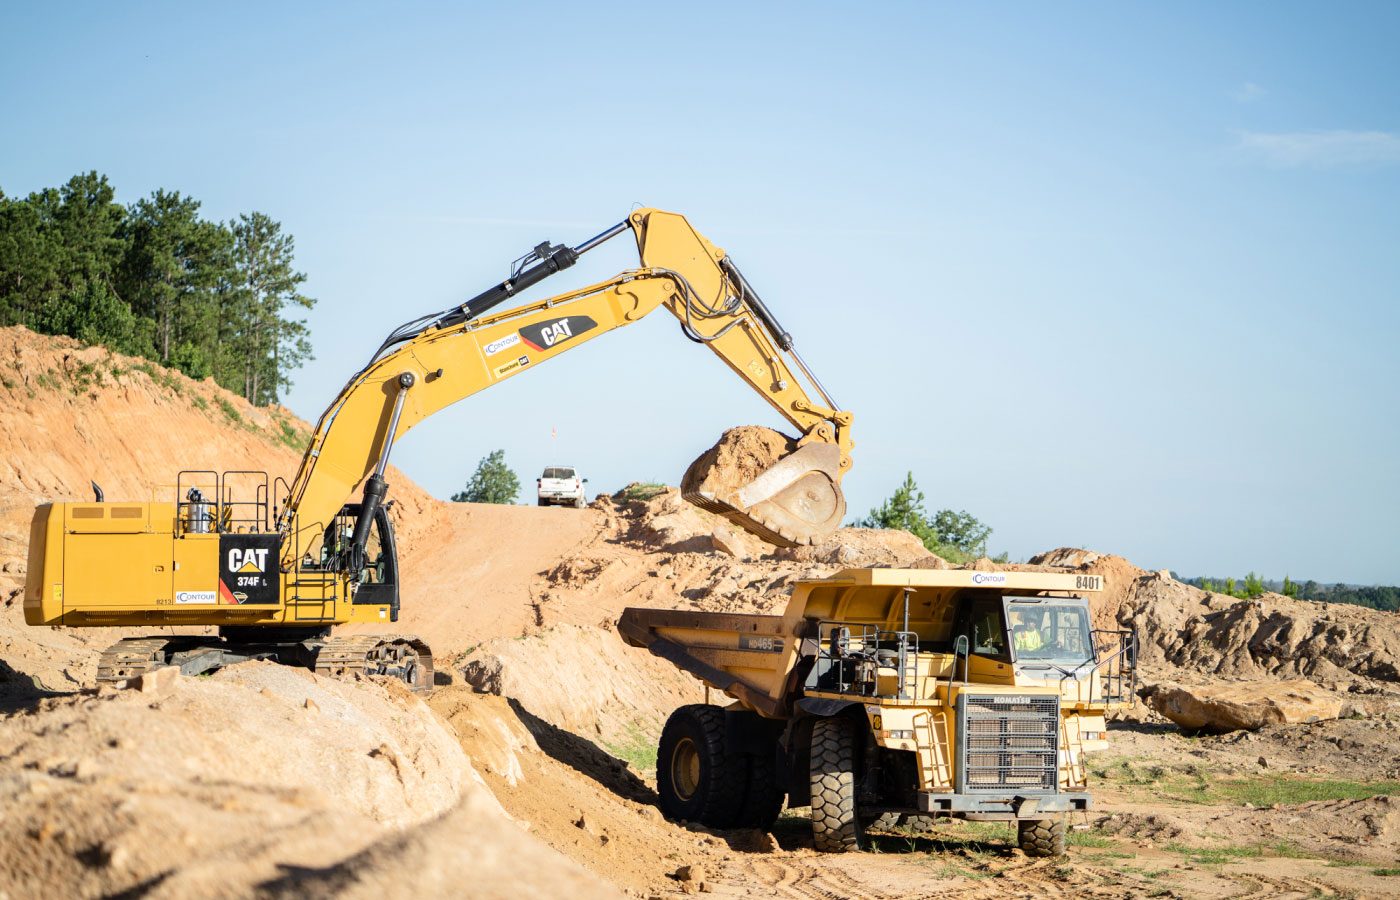 Cat 374f Loading Dirt Onto Dump Truck At Mass Excavation Job Site